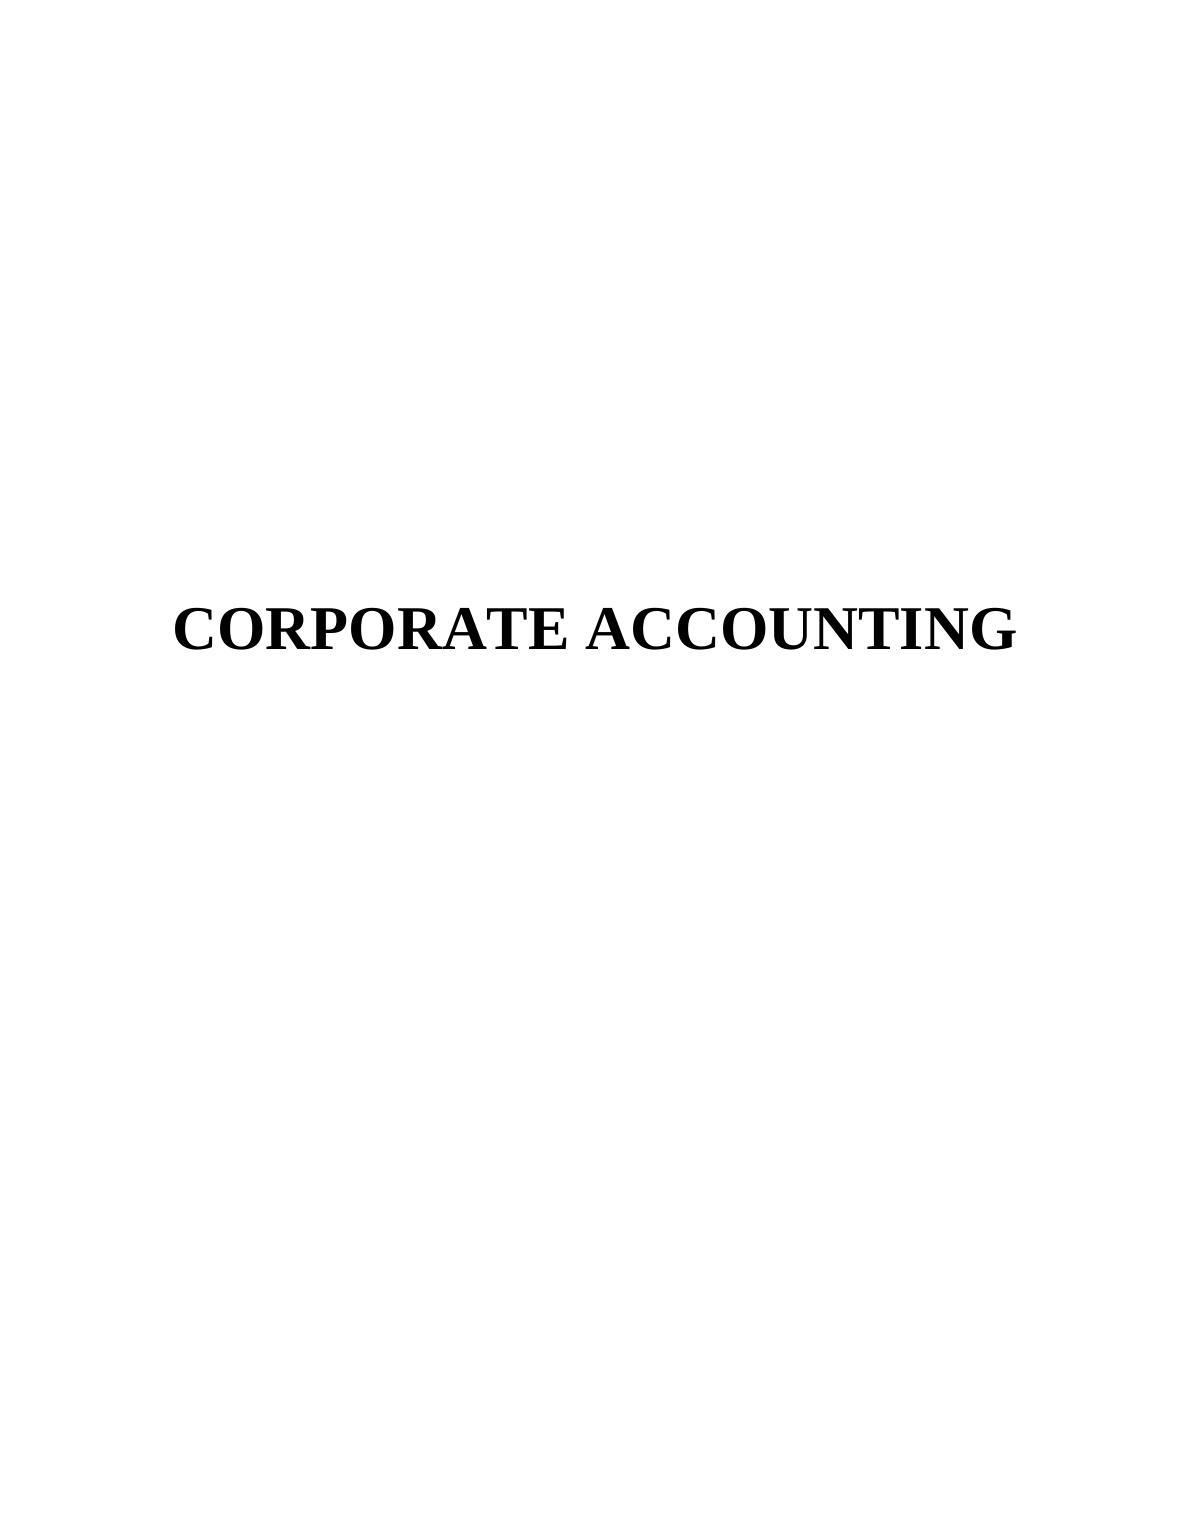 HI5020 Corporate Accounting: Doc_1